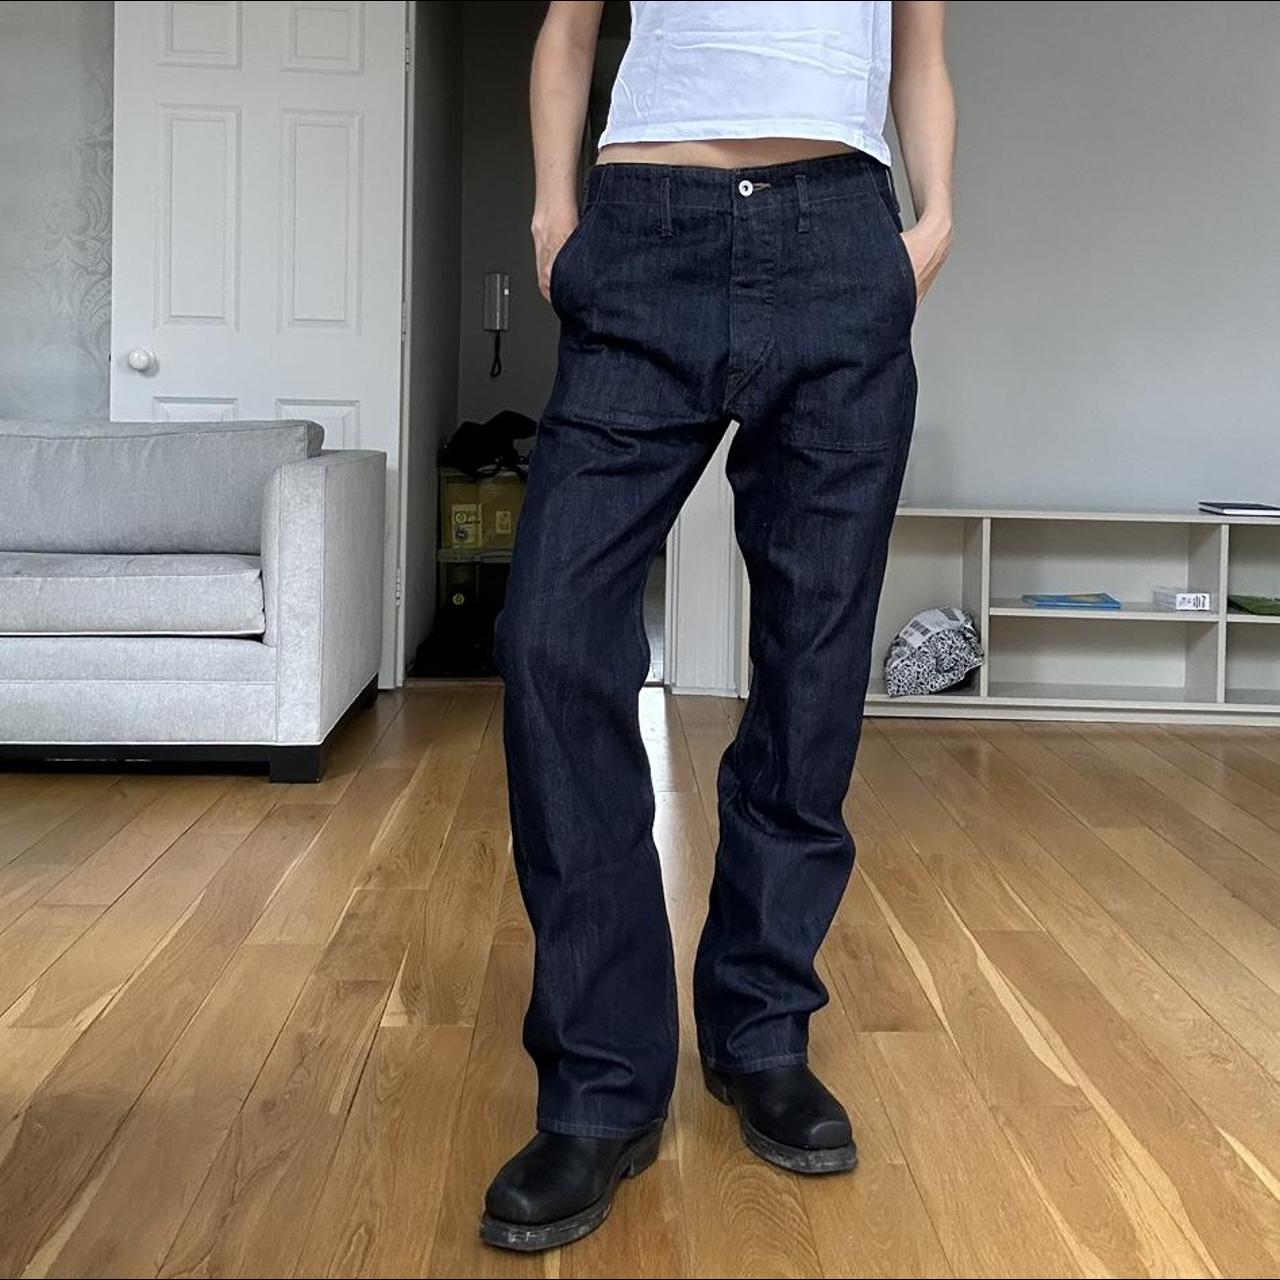 Margret Howell Japanese denim jeans , Show on size 10